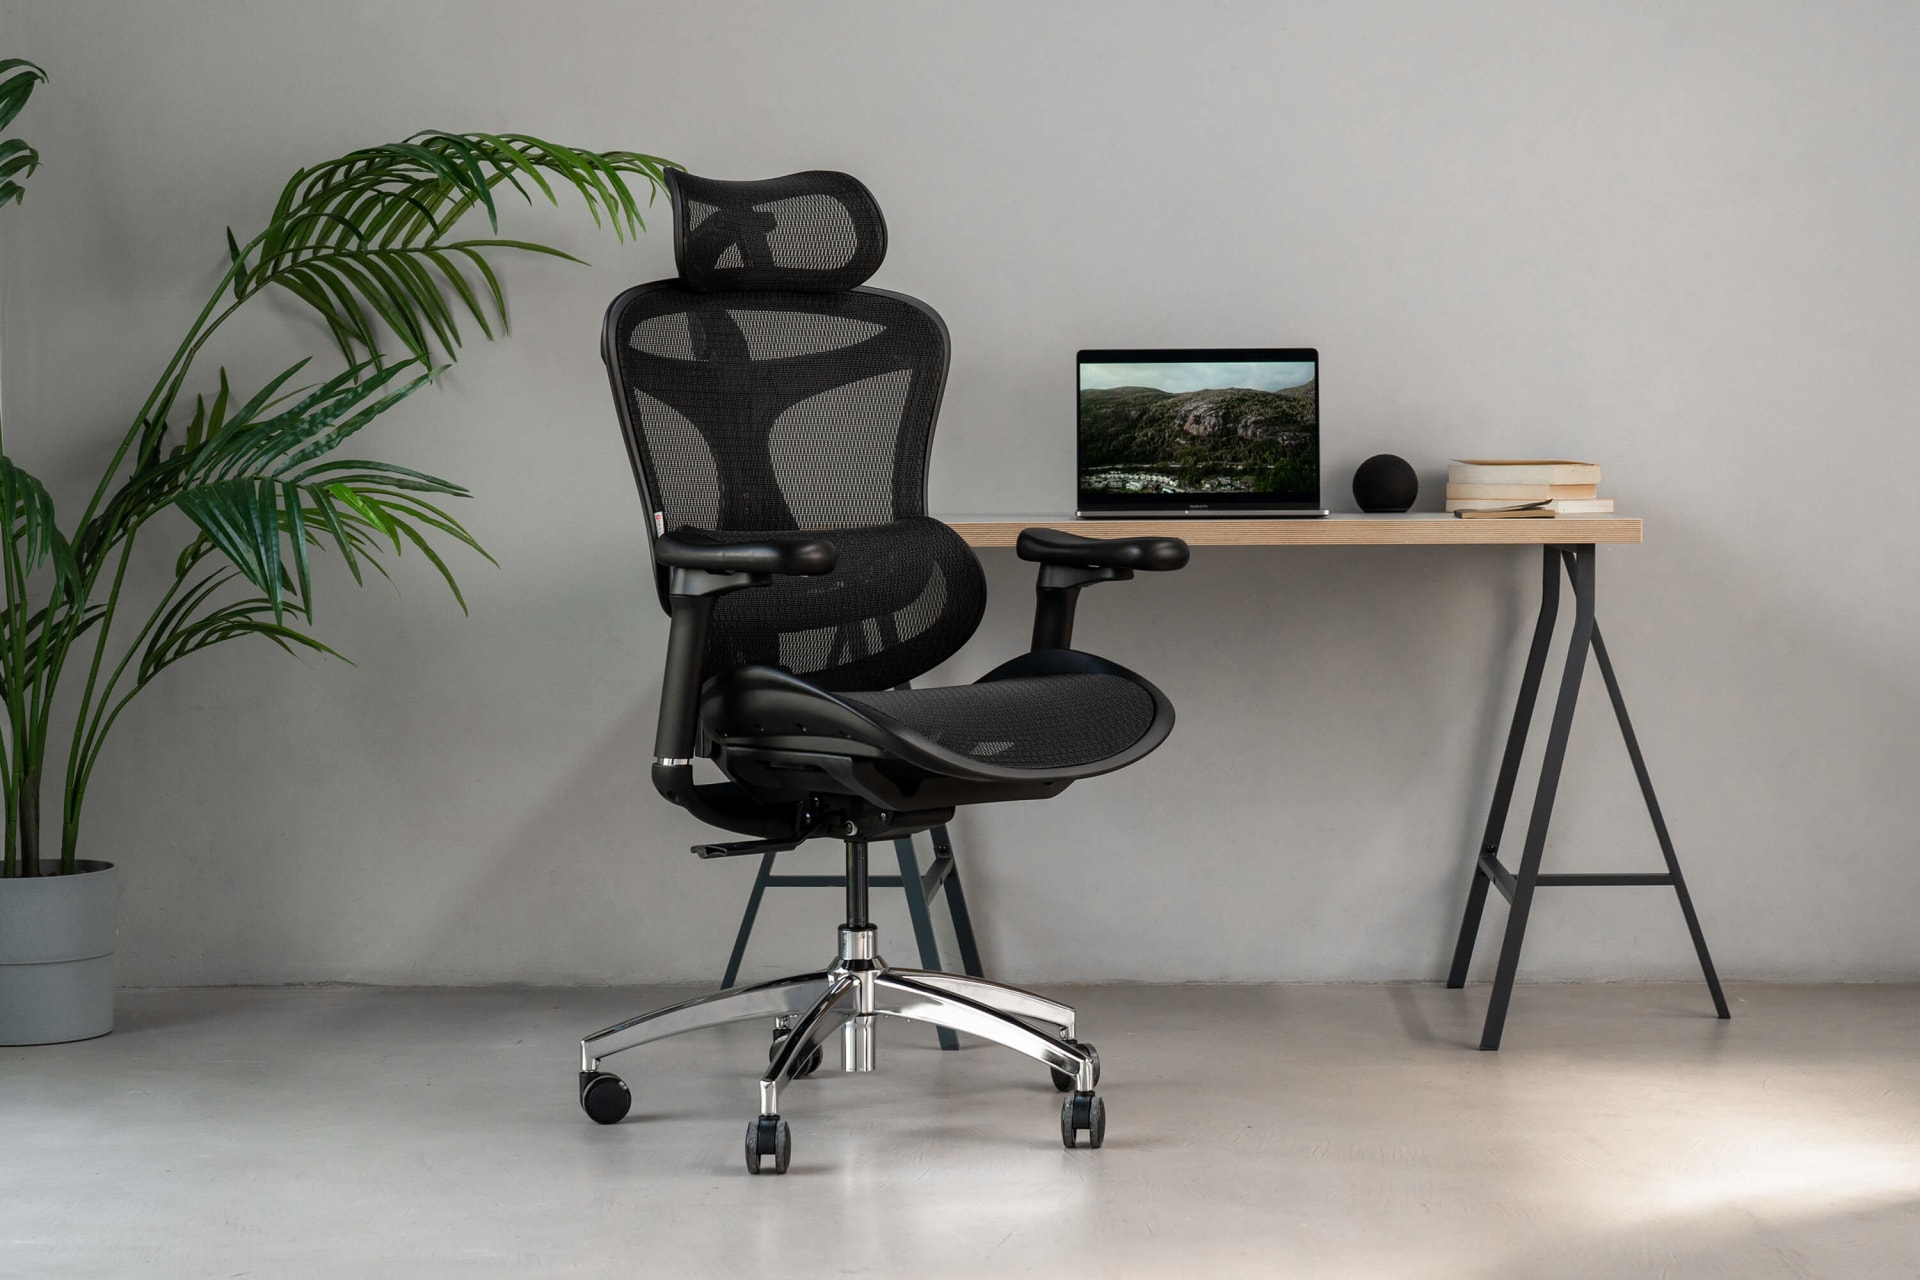 Sihoo ergonomic chair office chair setup